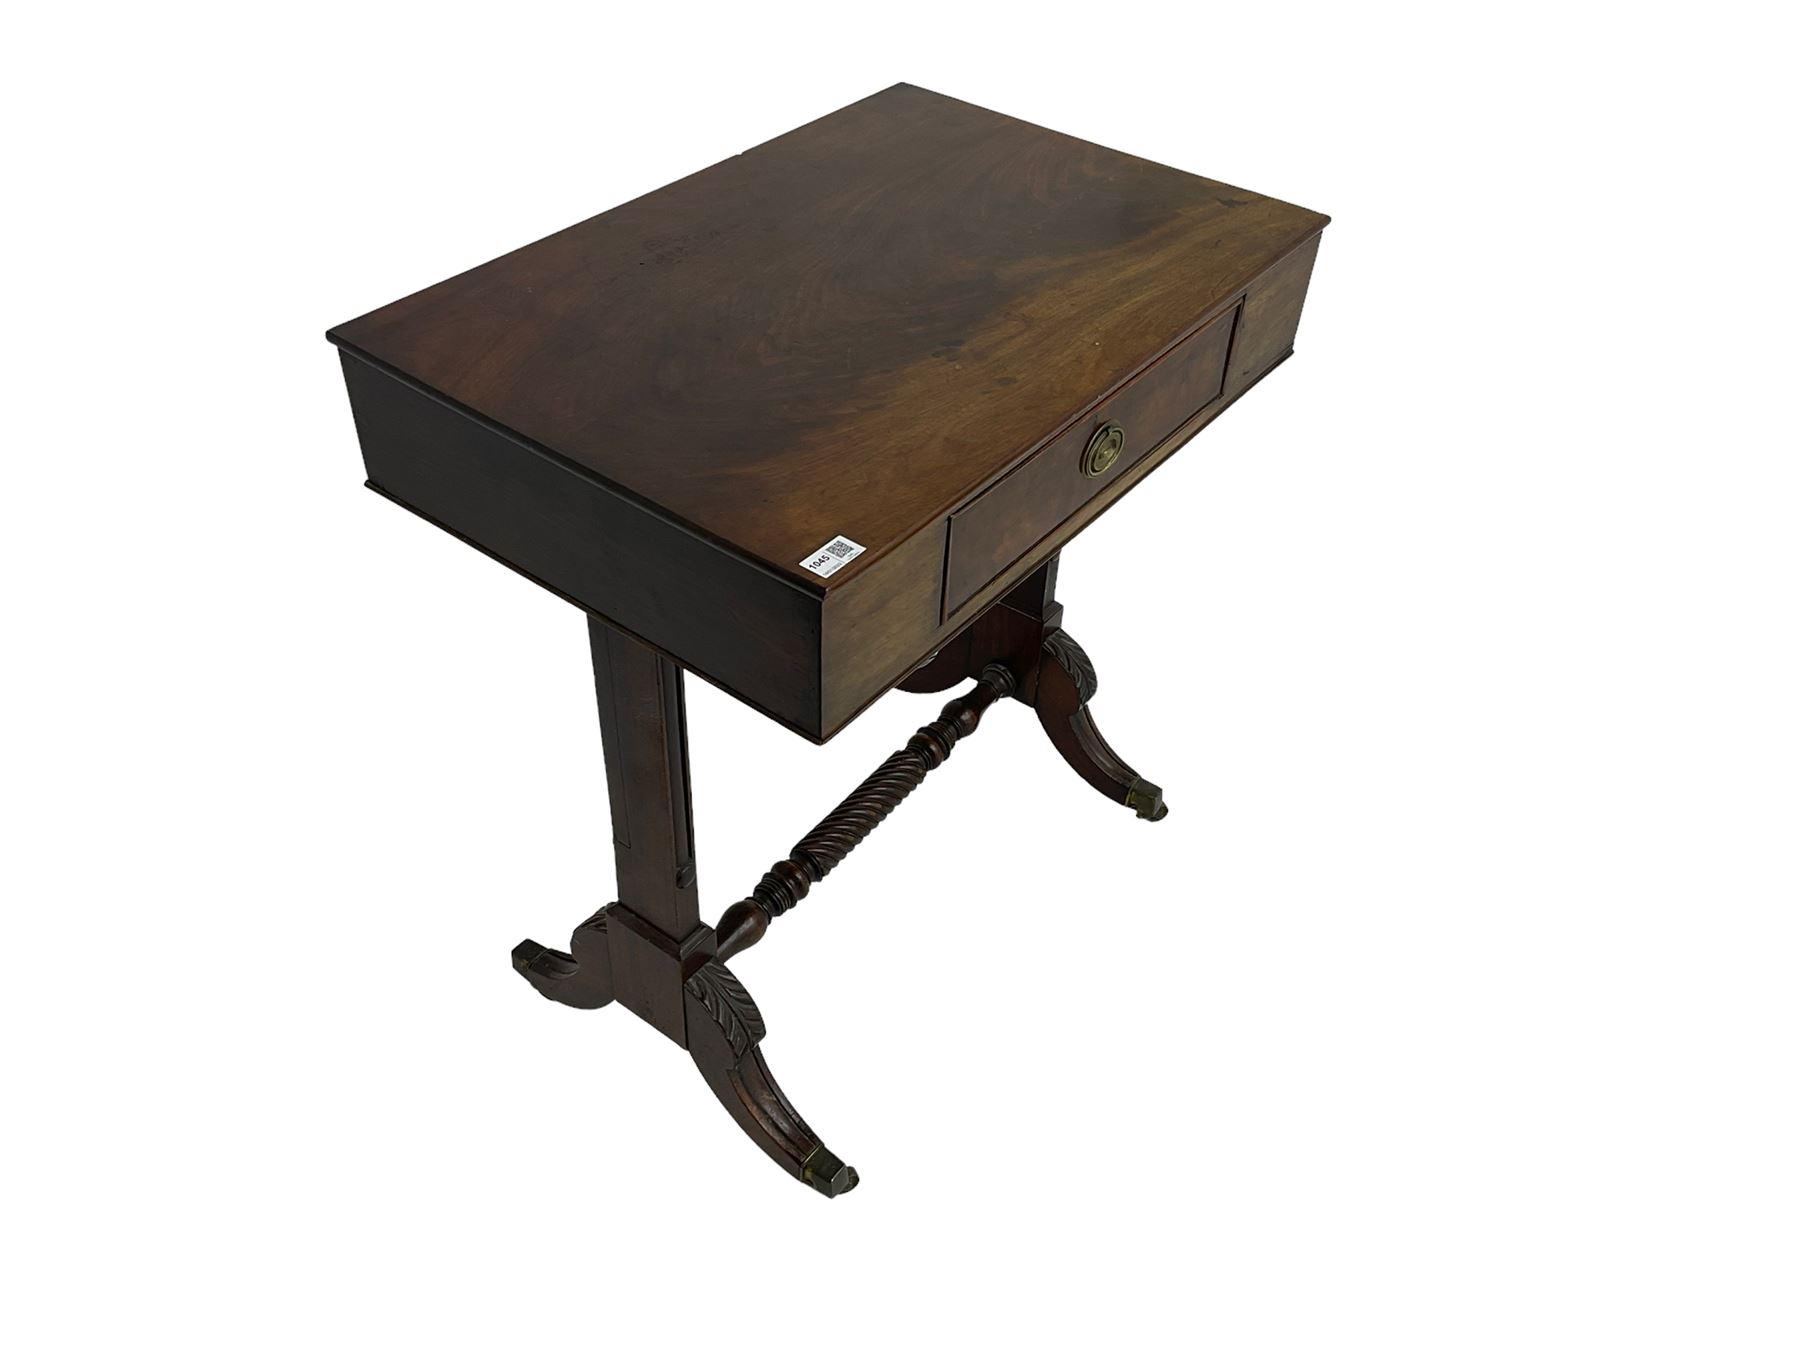 19th century mahogany side table - Image 3 of 6